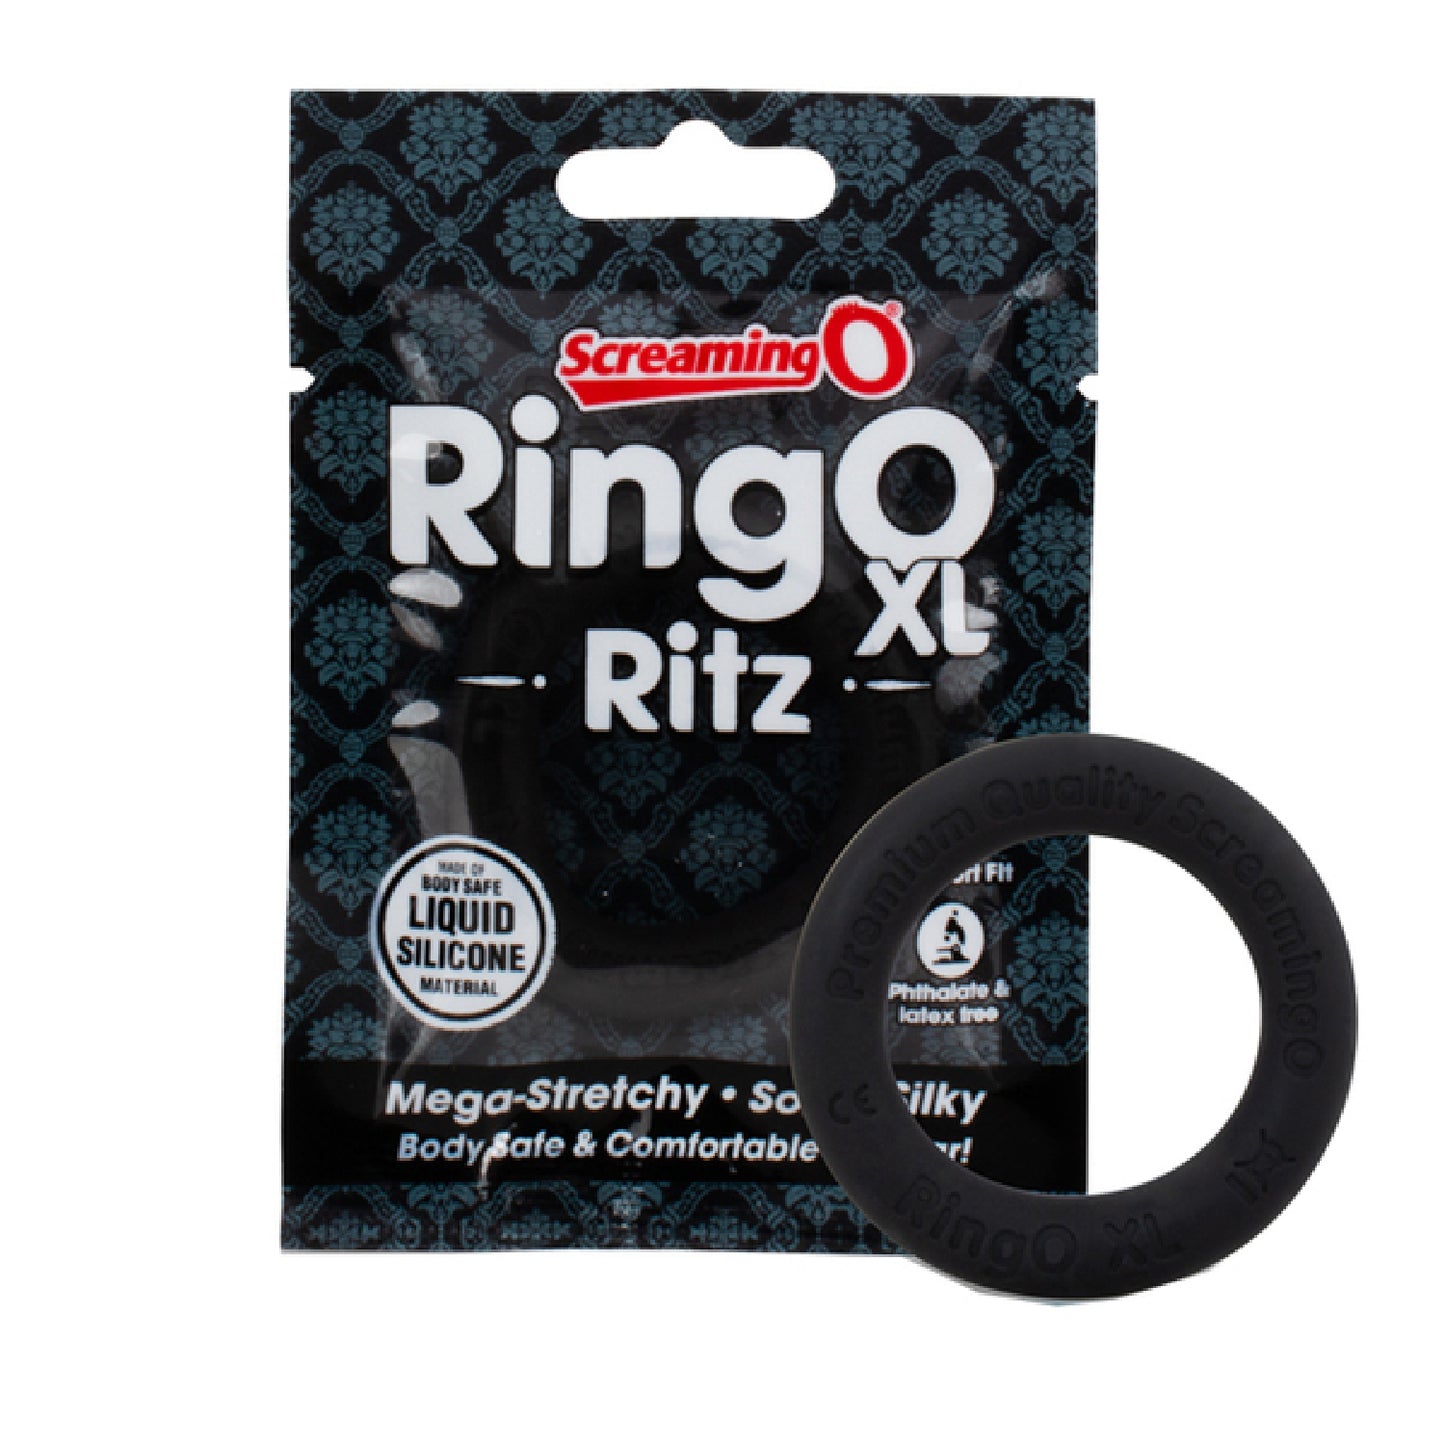 RingO Ritz XL - One Stop Adult Shop